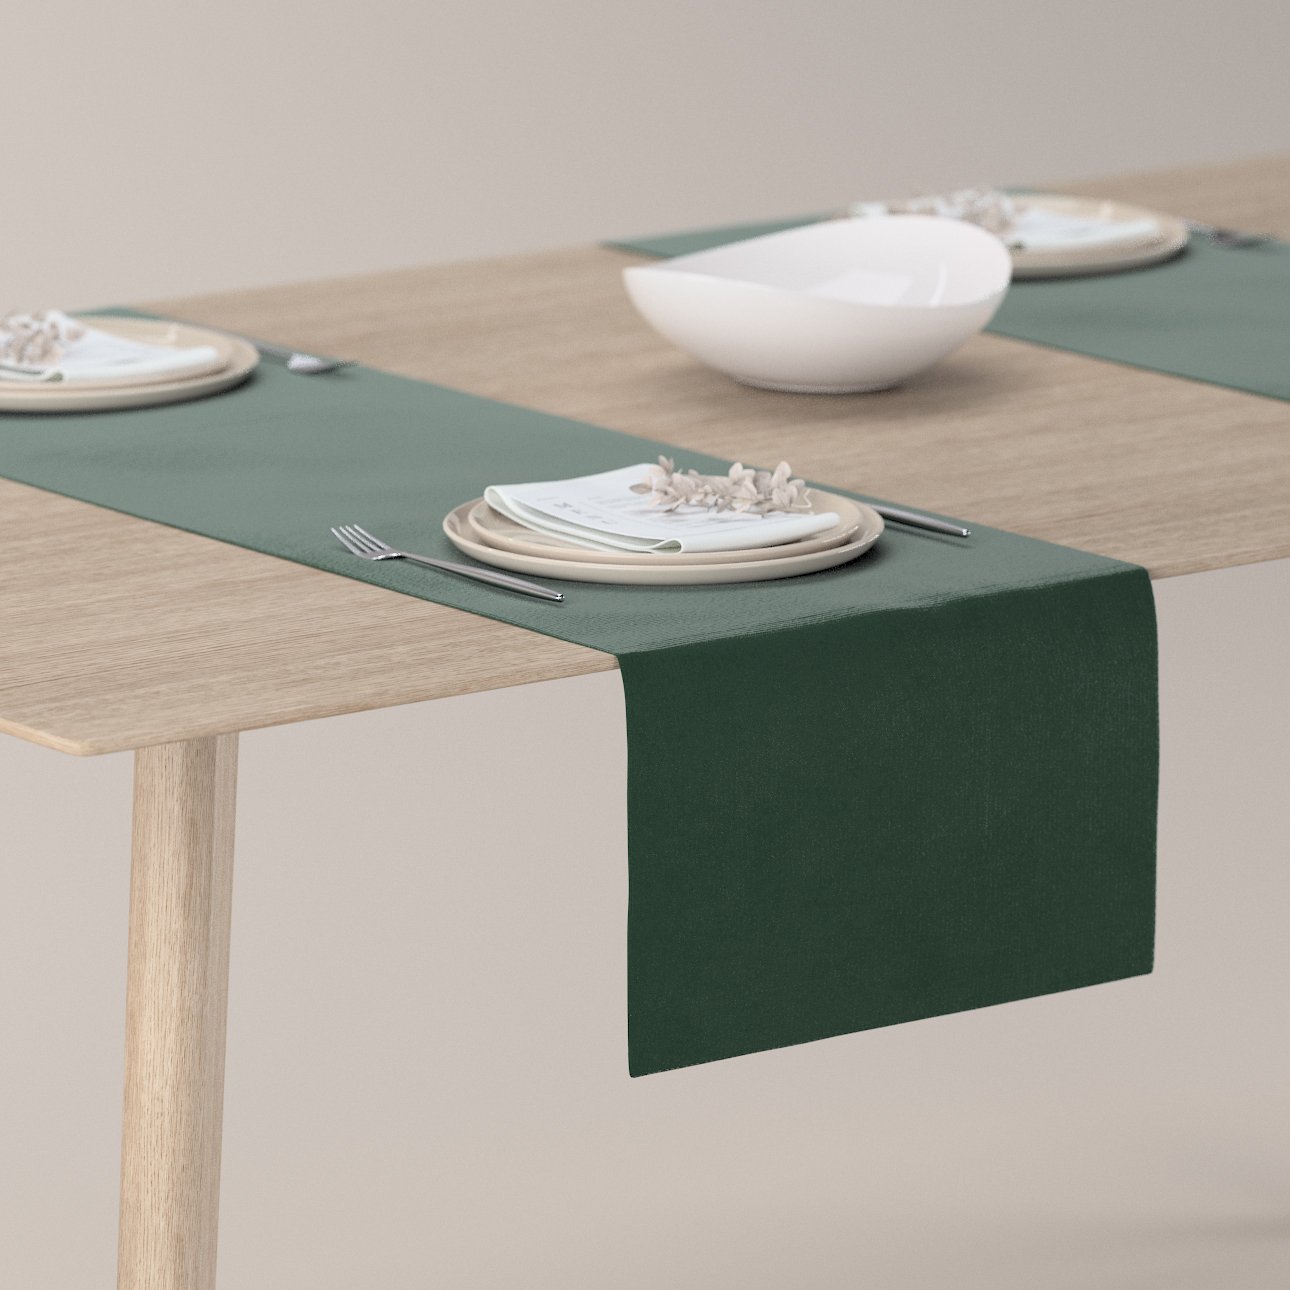 Dekoria Štóla na stôl, lesná zelená, 40 x 130 cm, Crema, 180-63